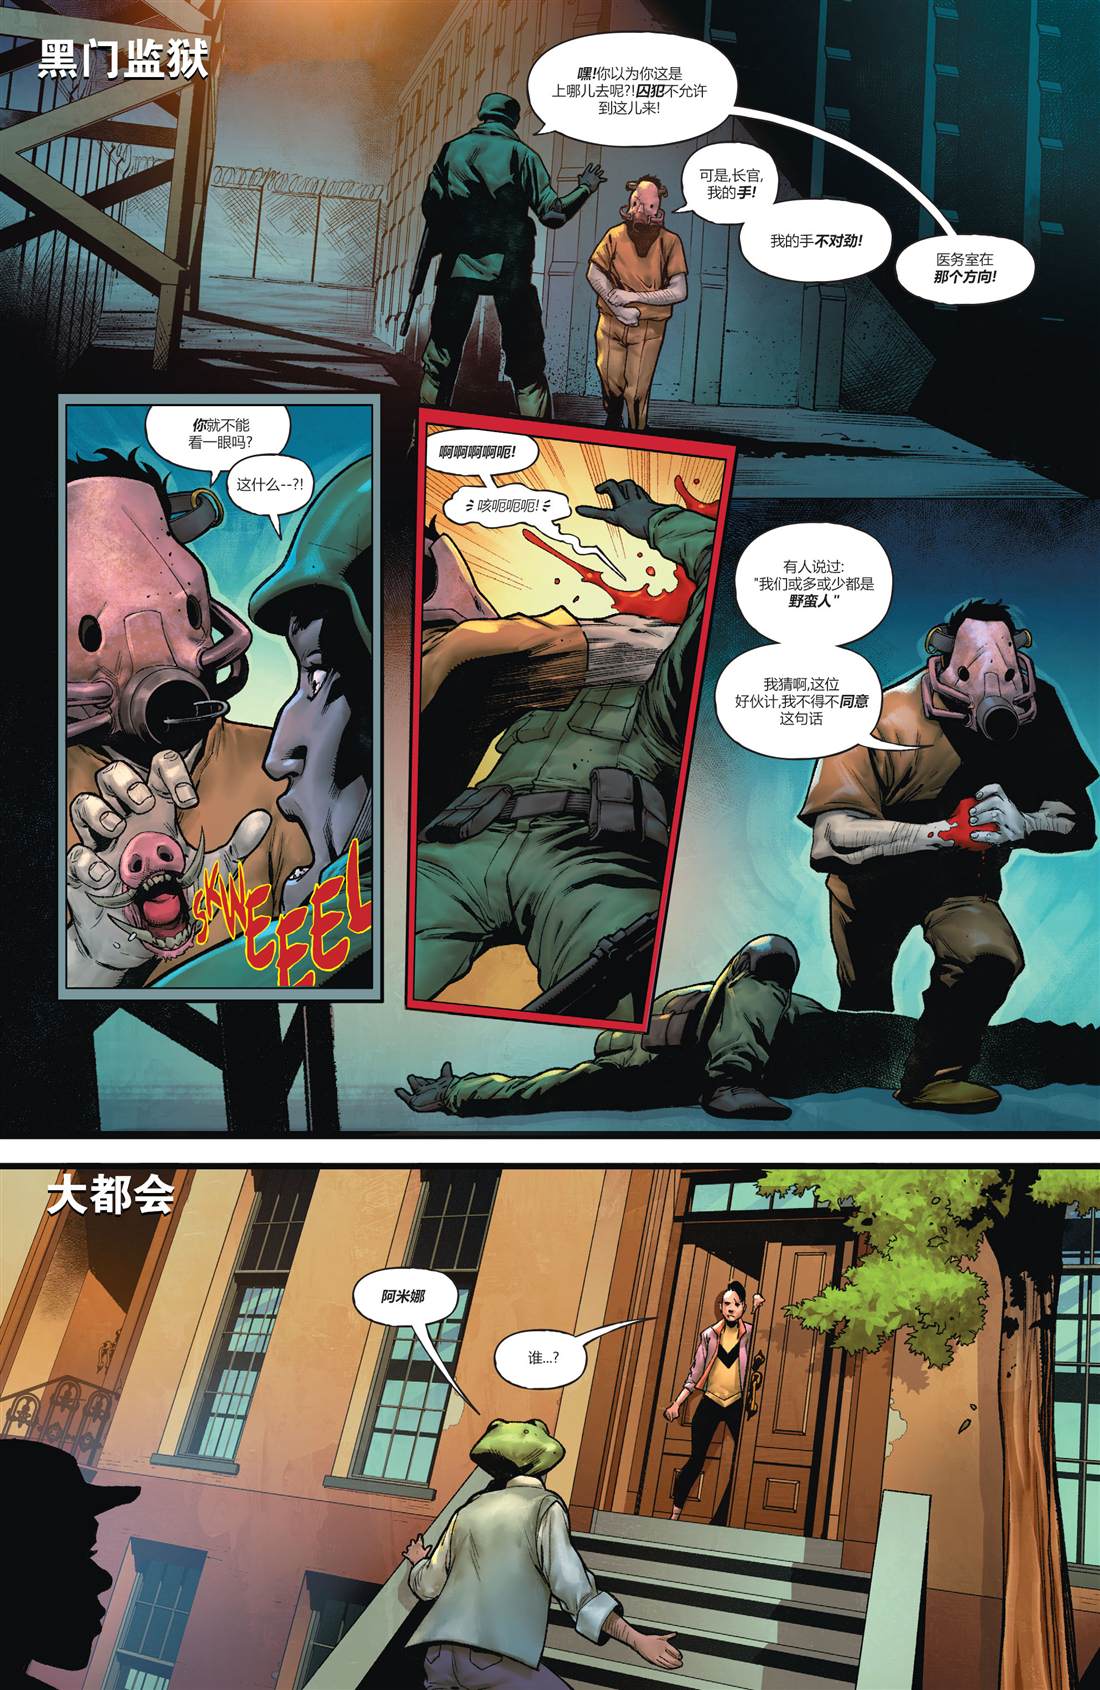 DC未來態 - 蝙蝠俠超人#2 - 2